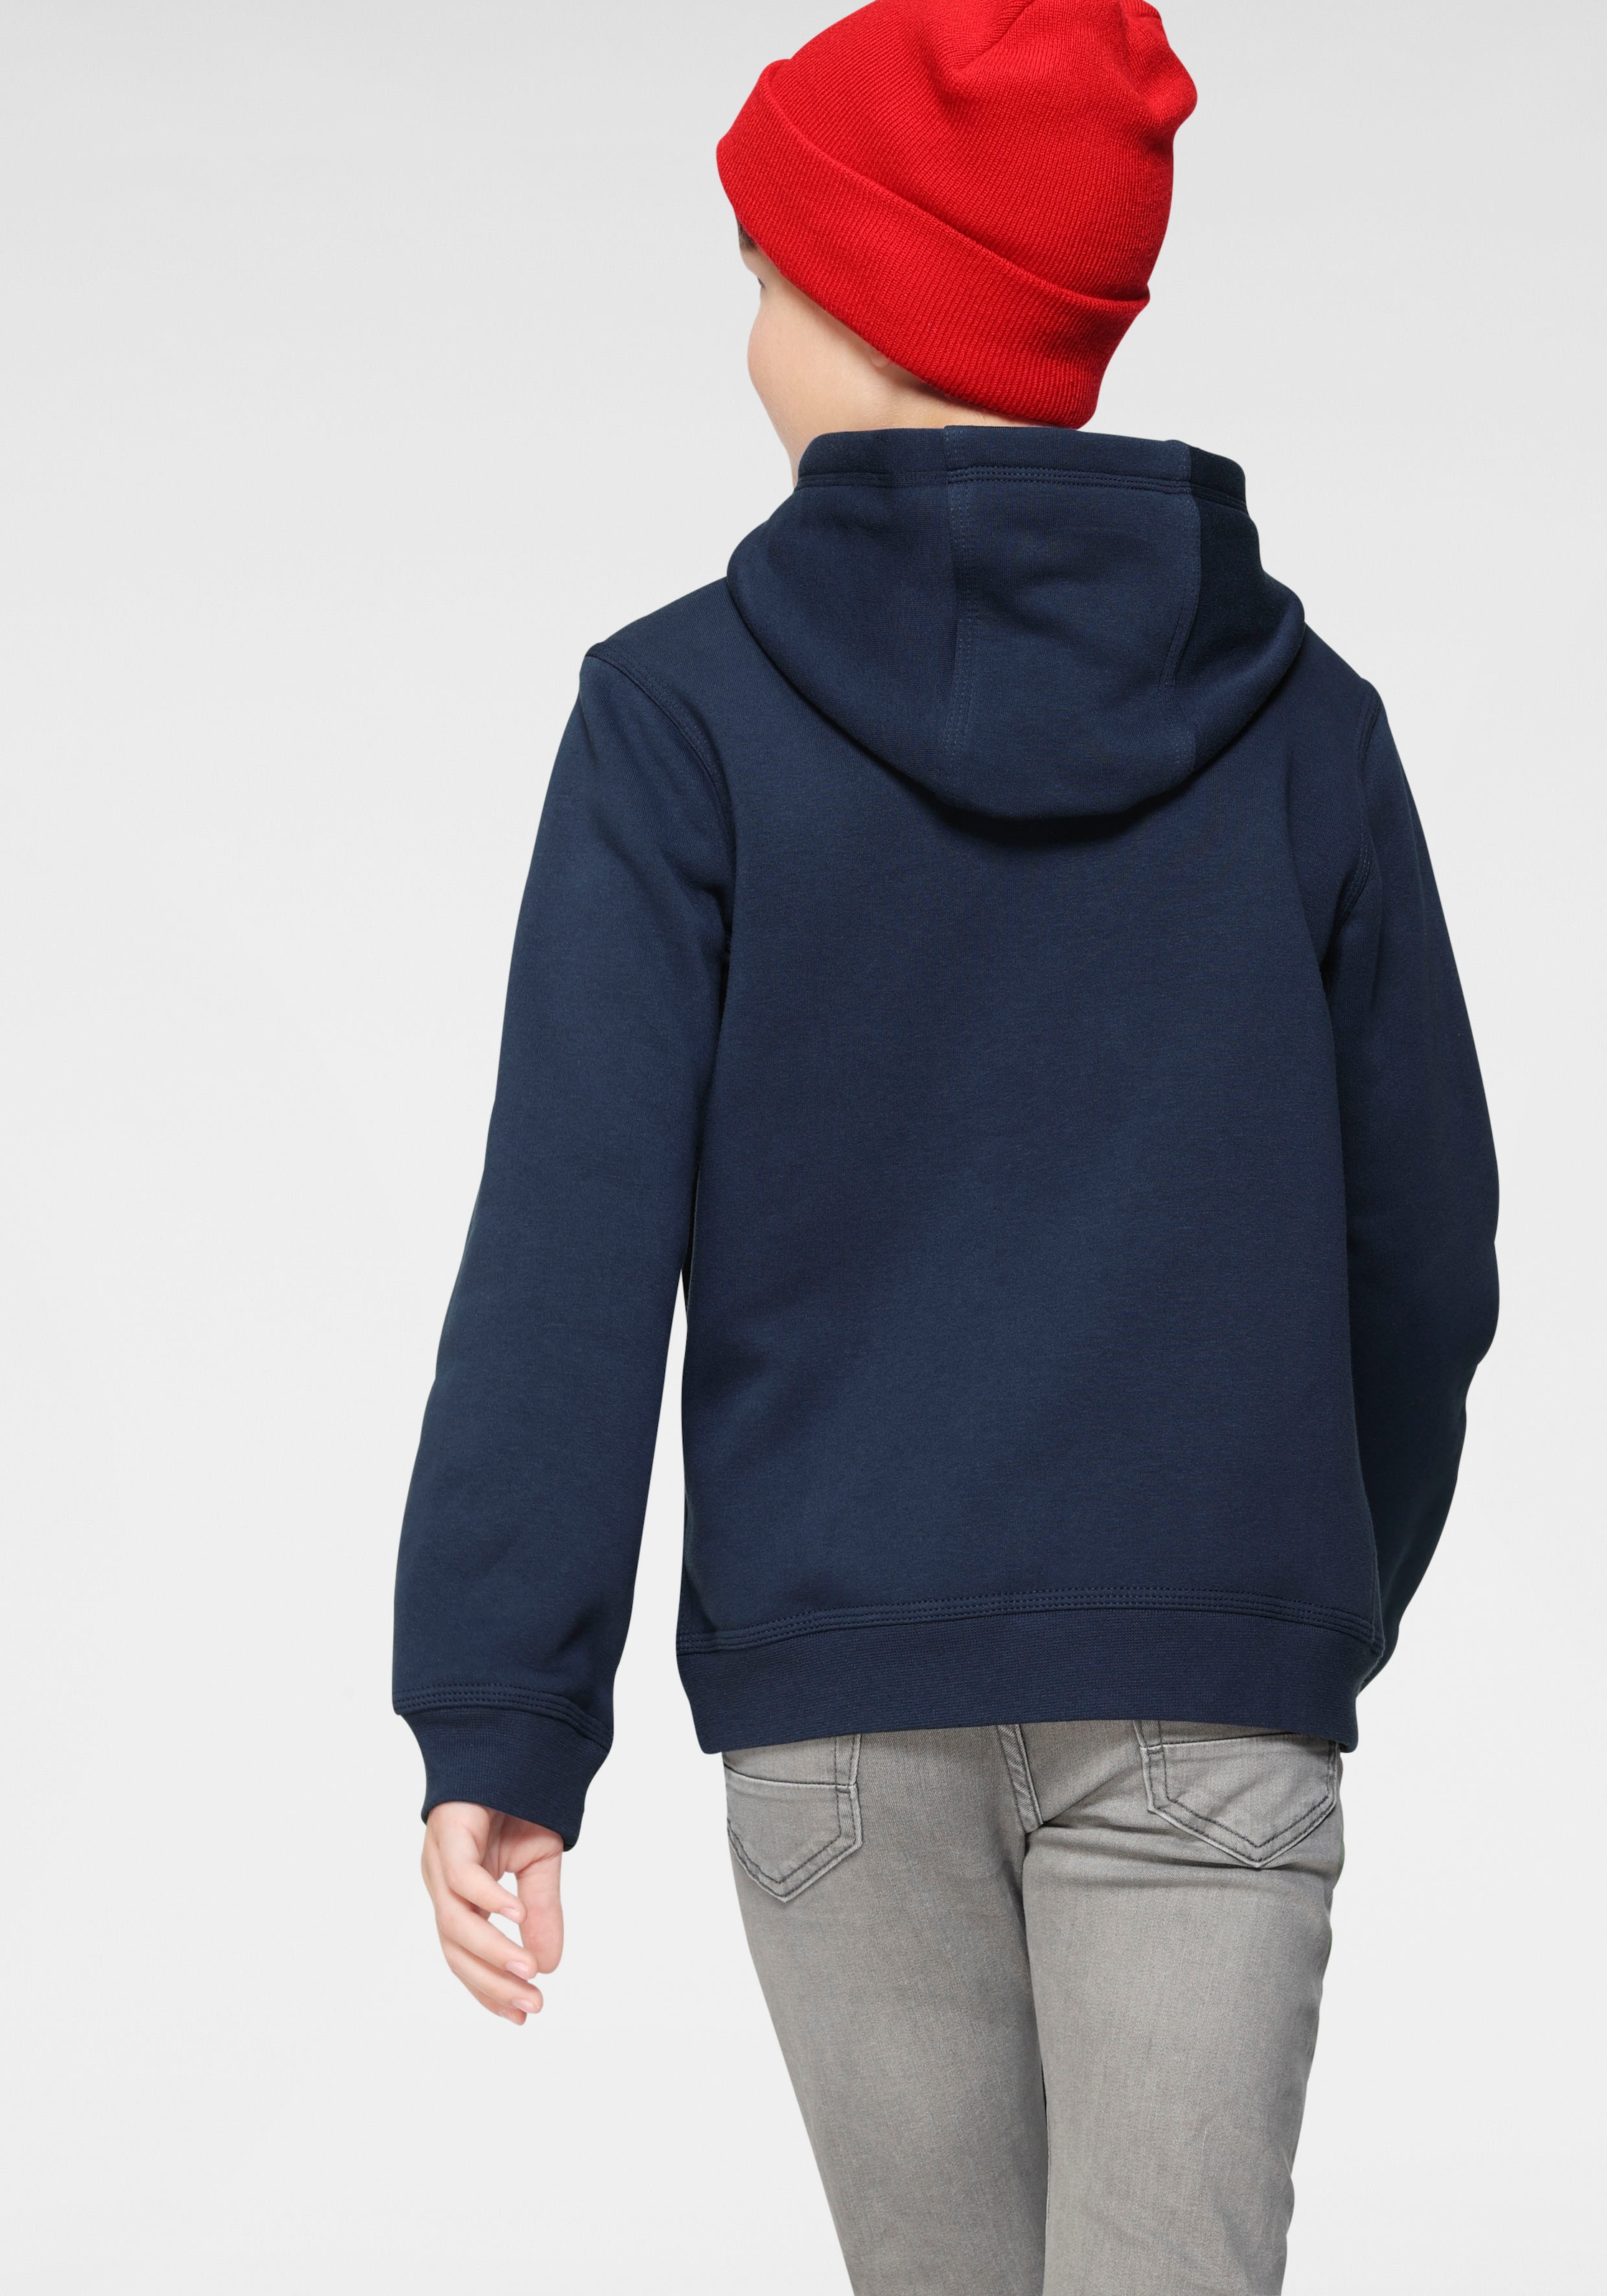 Hoodie« Nike Pullover Kids\' OTTO kaufen Big Kapuzensweatshirt bei »Club Sportswear